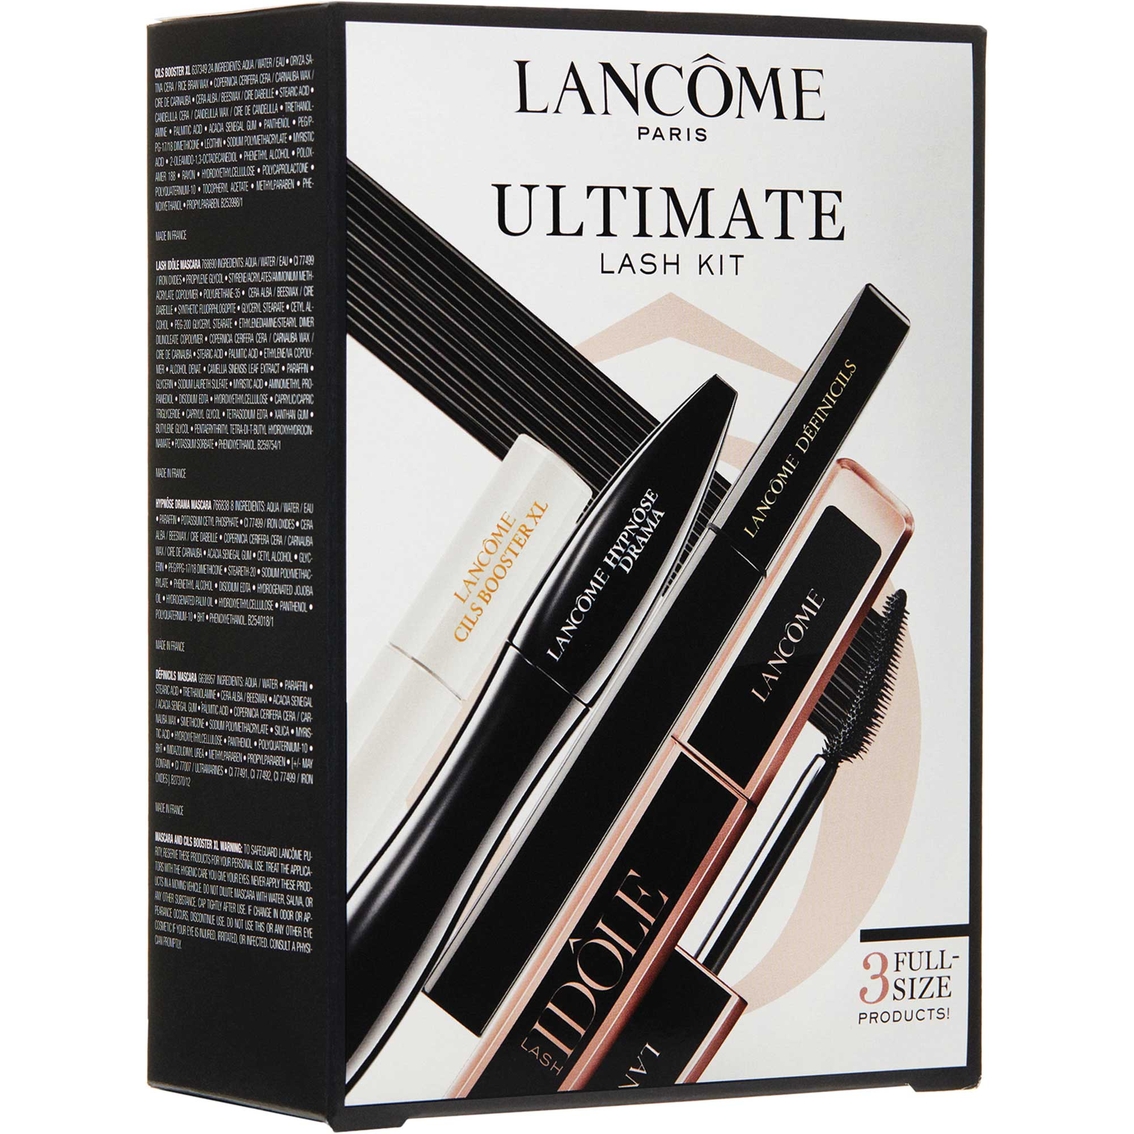 Lancome Ultimate Lash Kit - Image 3 of 3